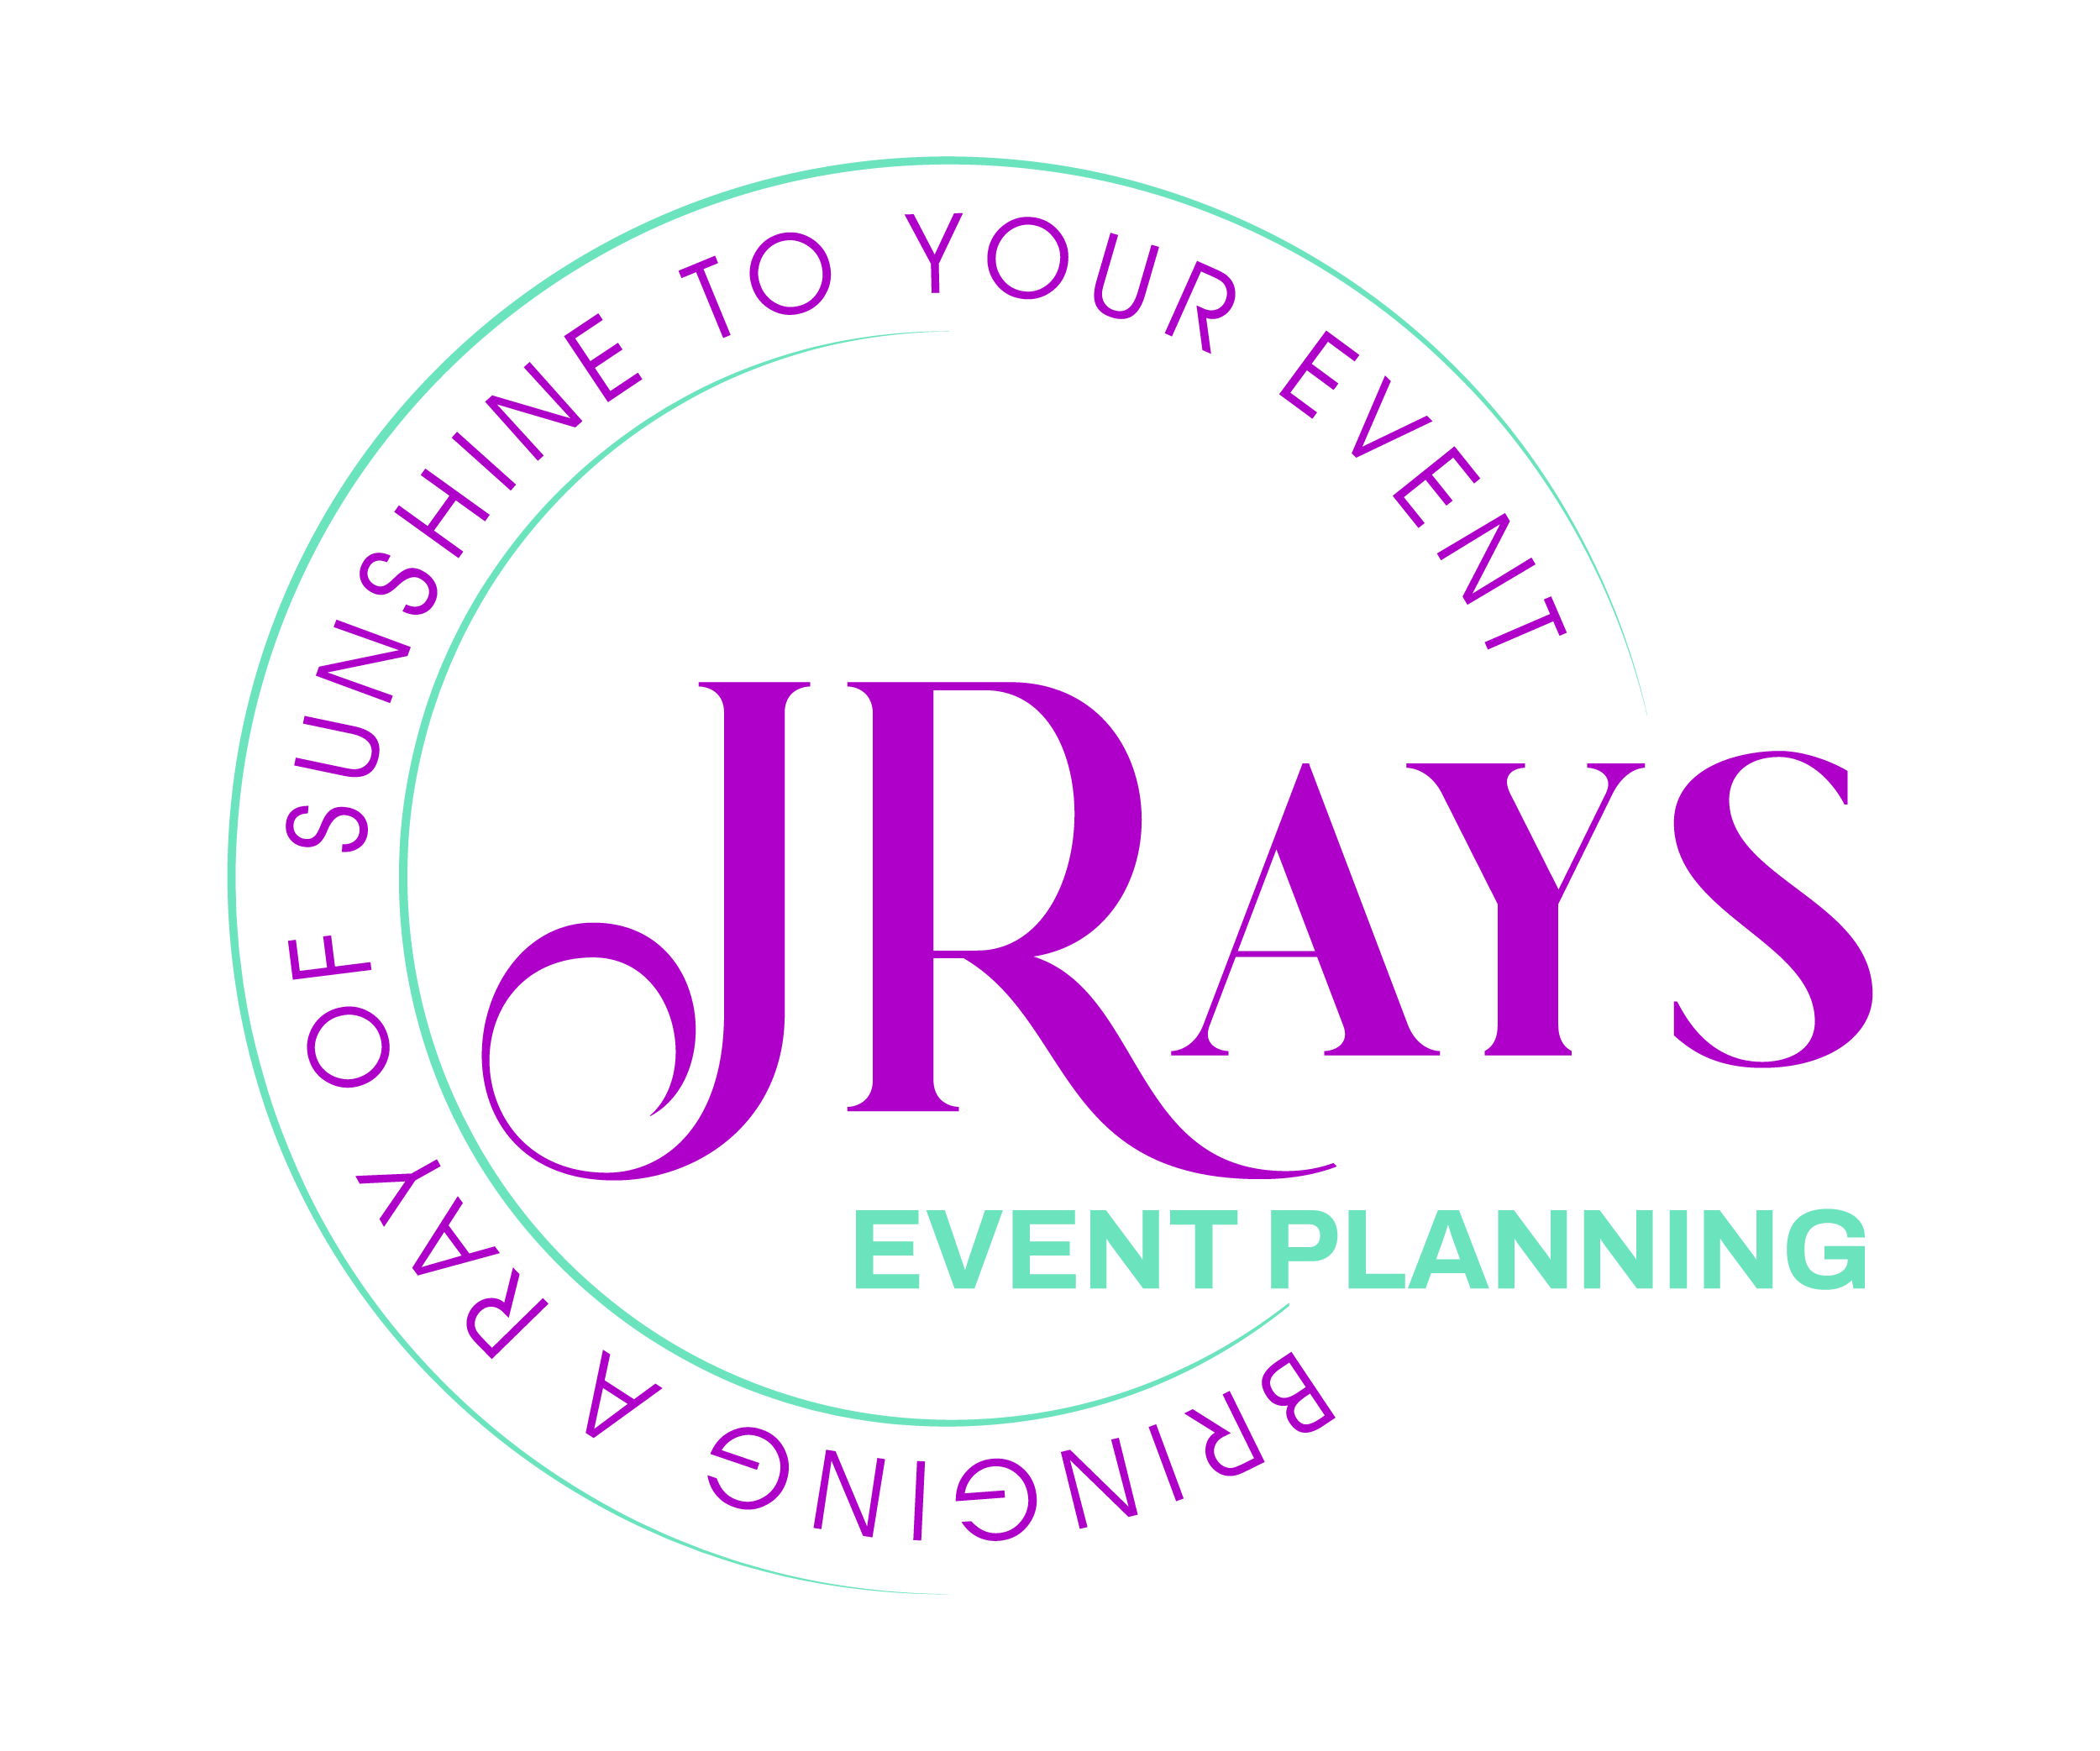 JRays Event Planning